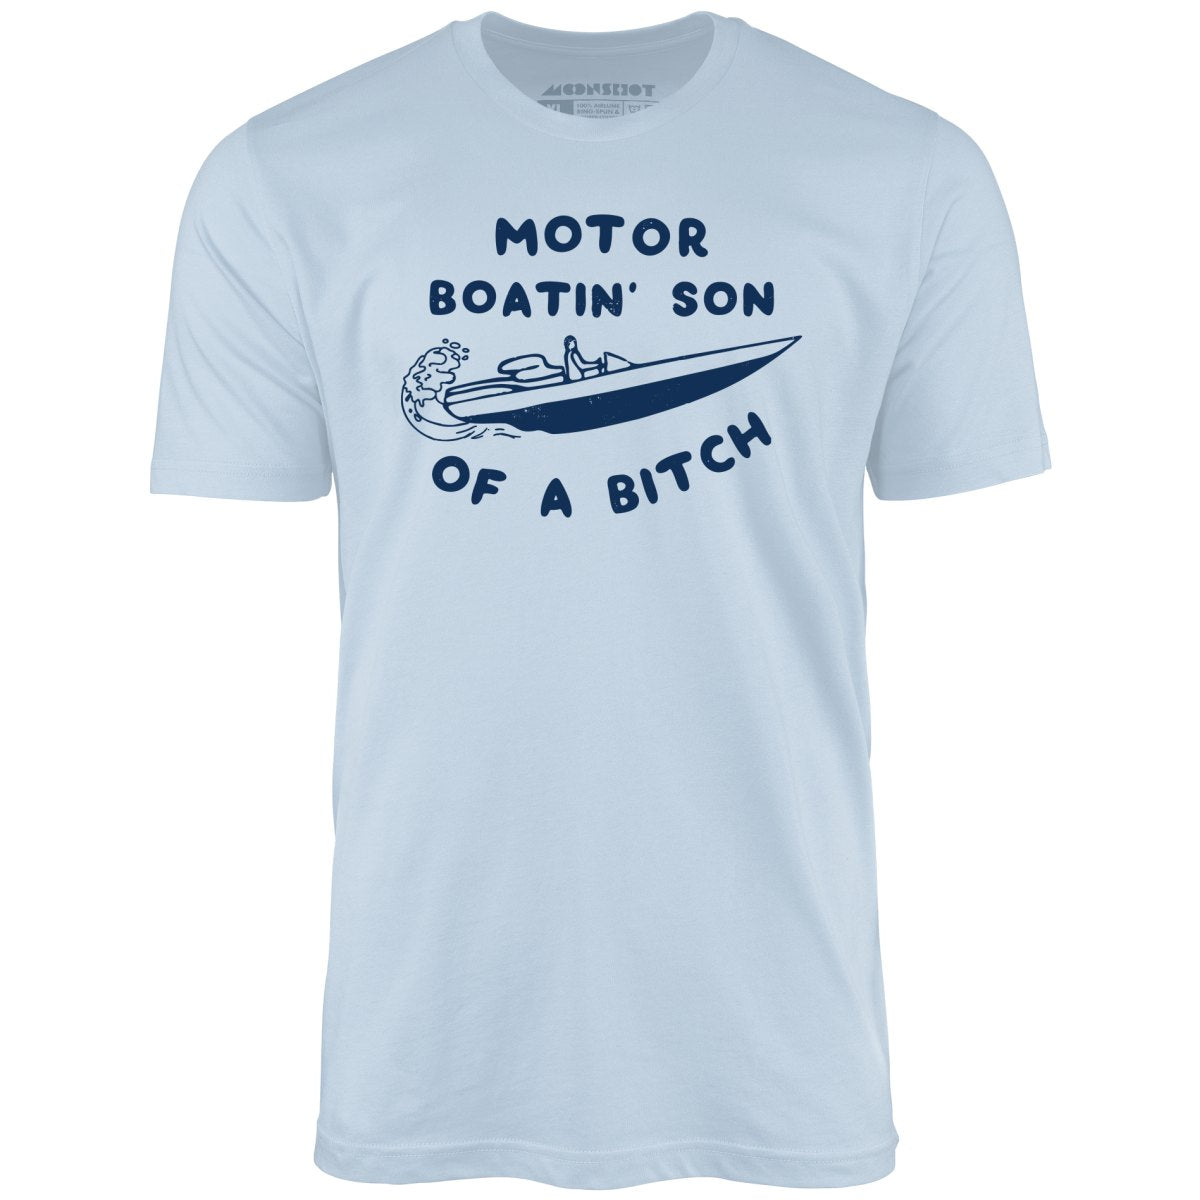 Motor Boatin' Son of a Bitch - Unisex T-Shirt